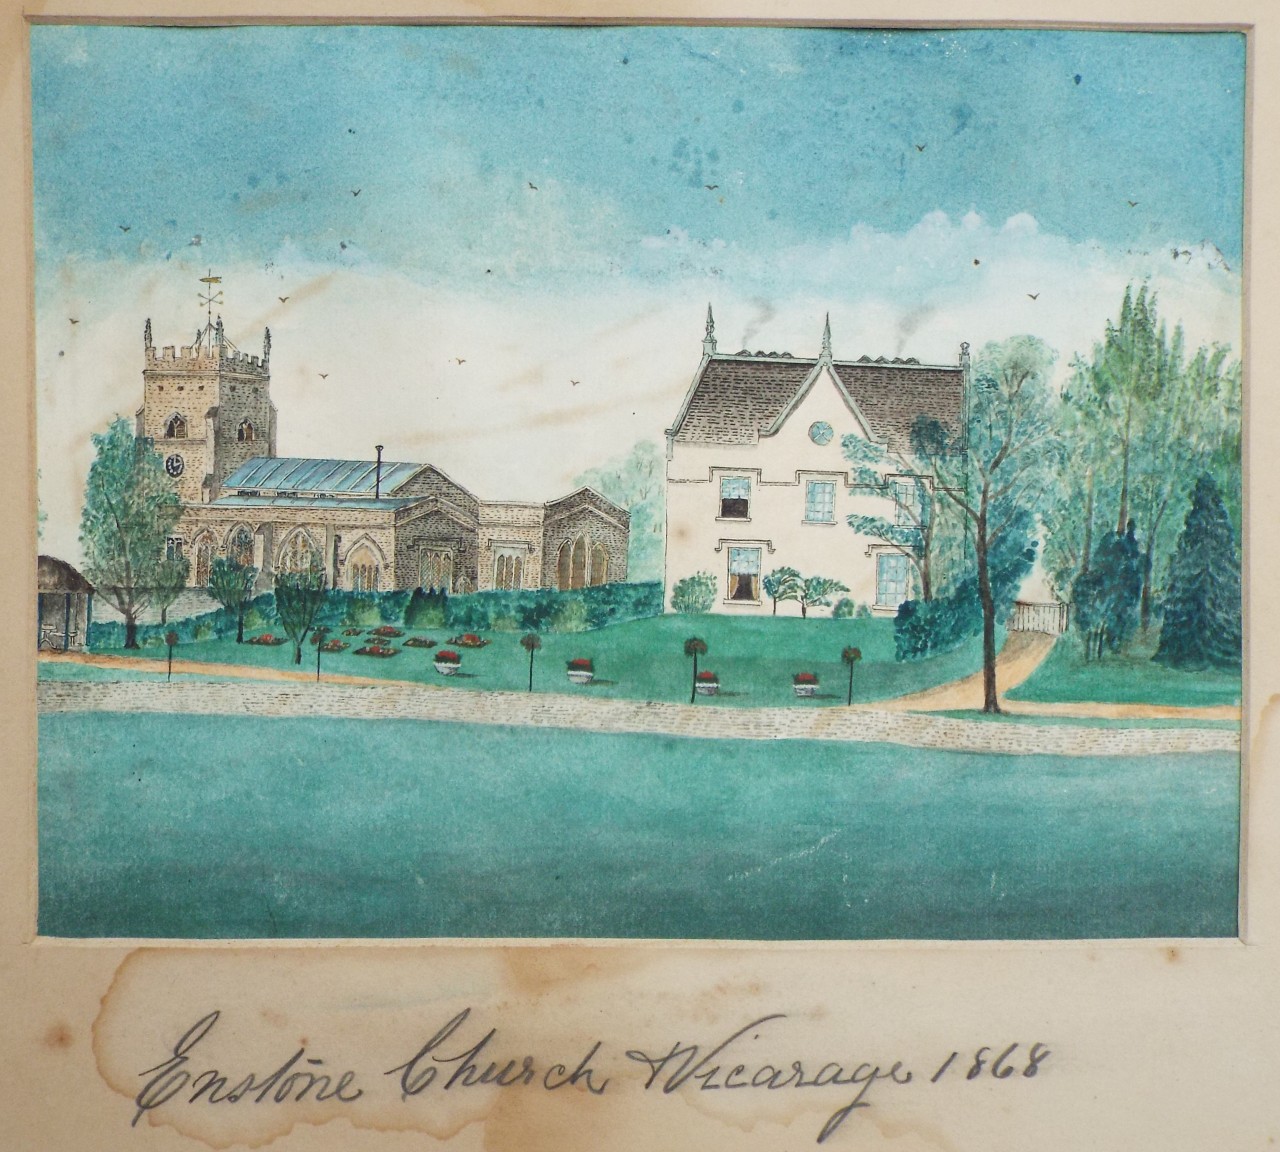 Watercolour - Enstone Church & Vicarage 1868